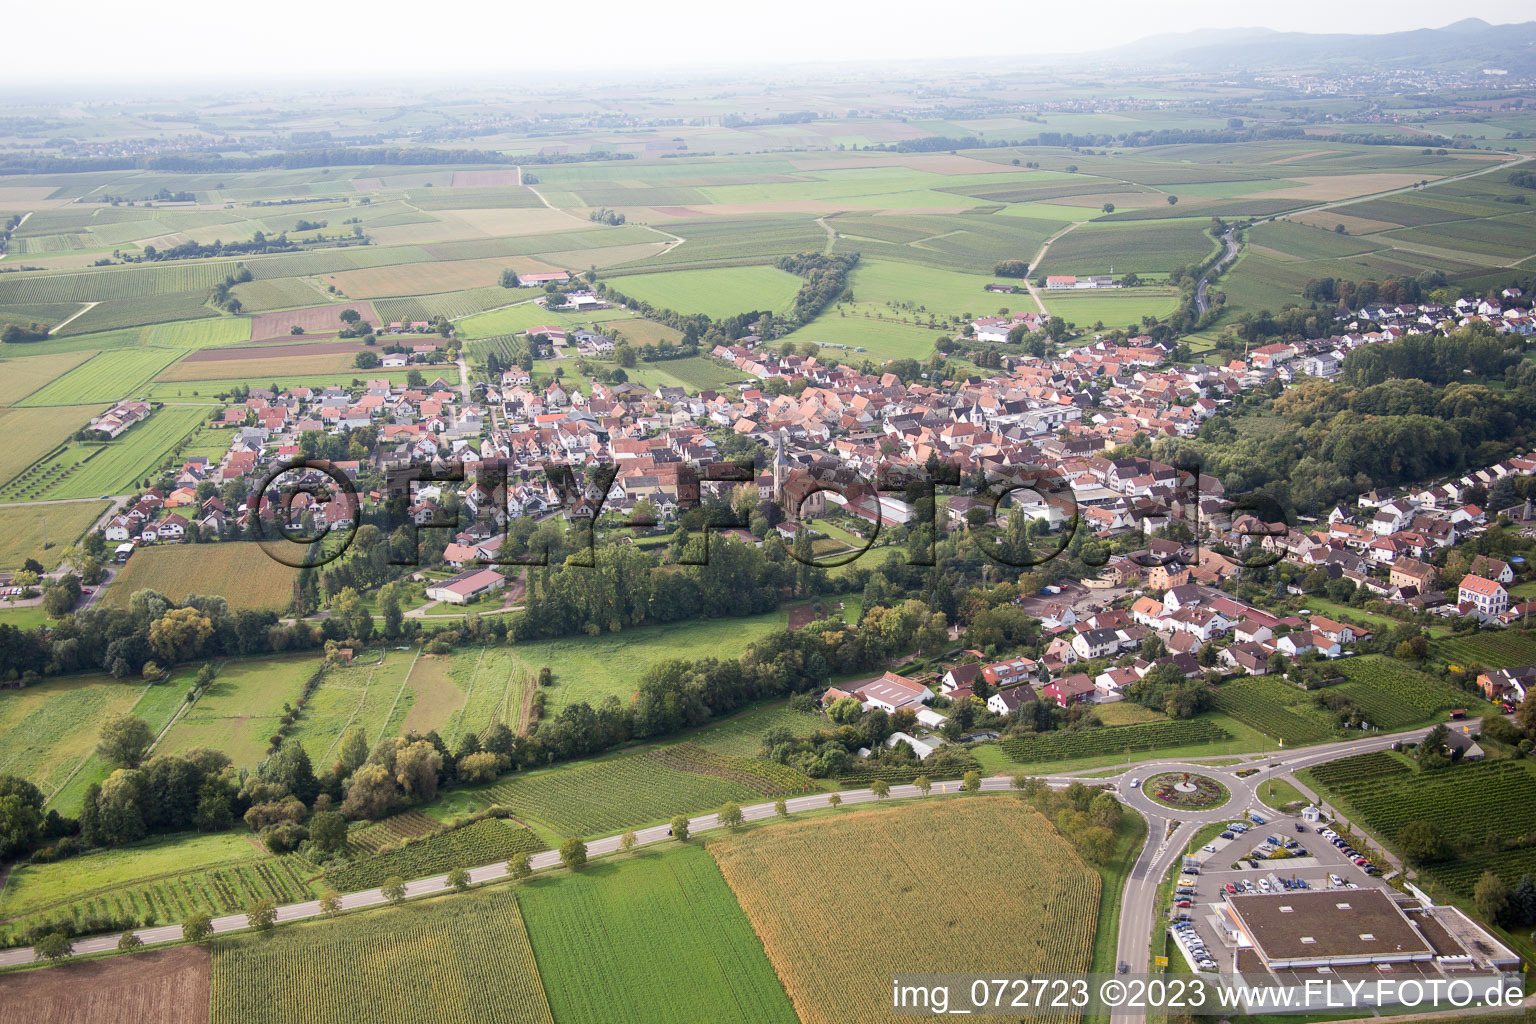 District Appenhofen in Billigheim-Ingenheim in the state Rhineland-Palatinate, Germany from above